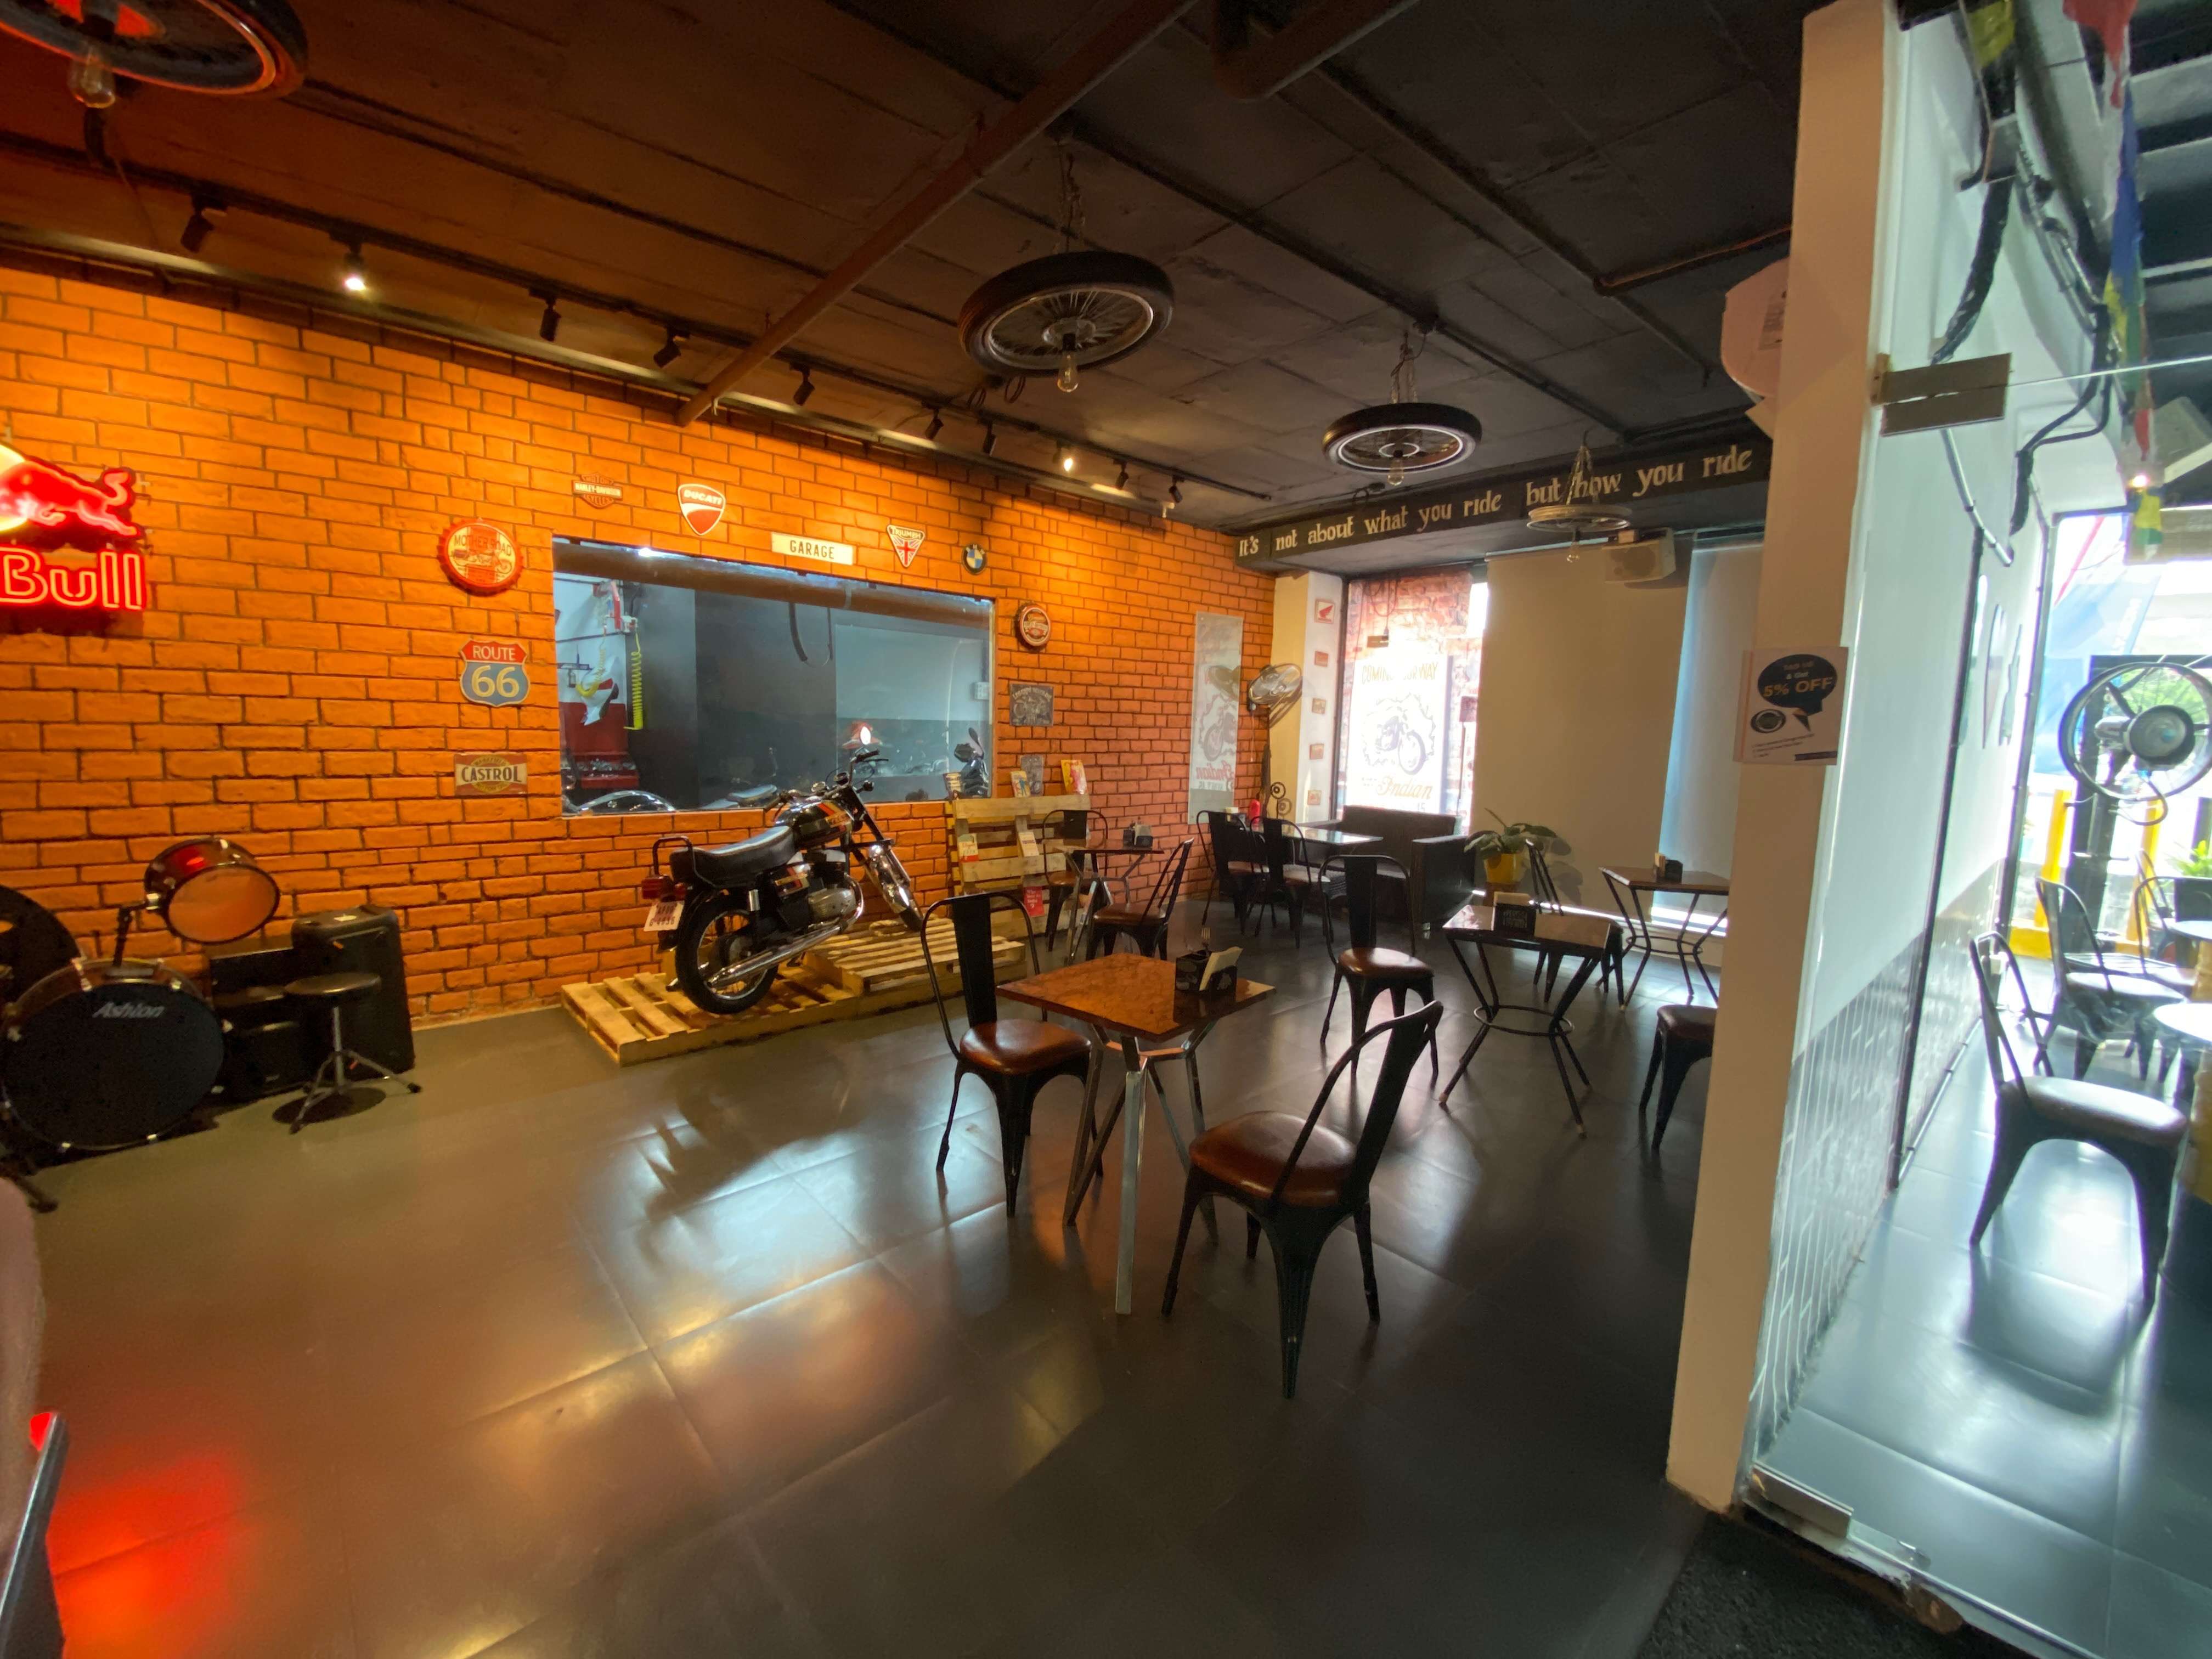 Photos of Garage Moto Cafe, Pictures of Garage Moto Cafe